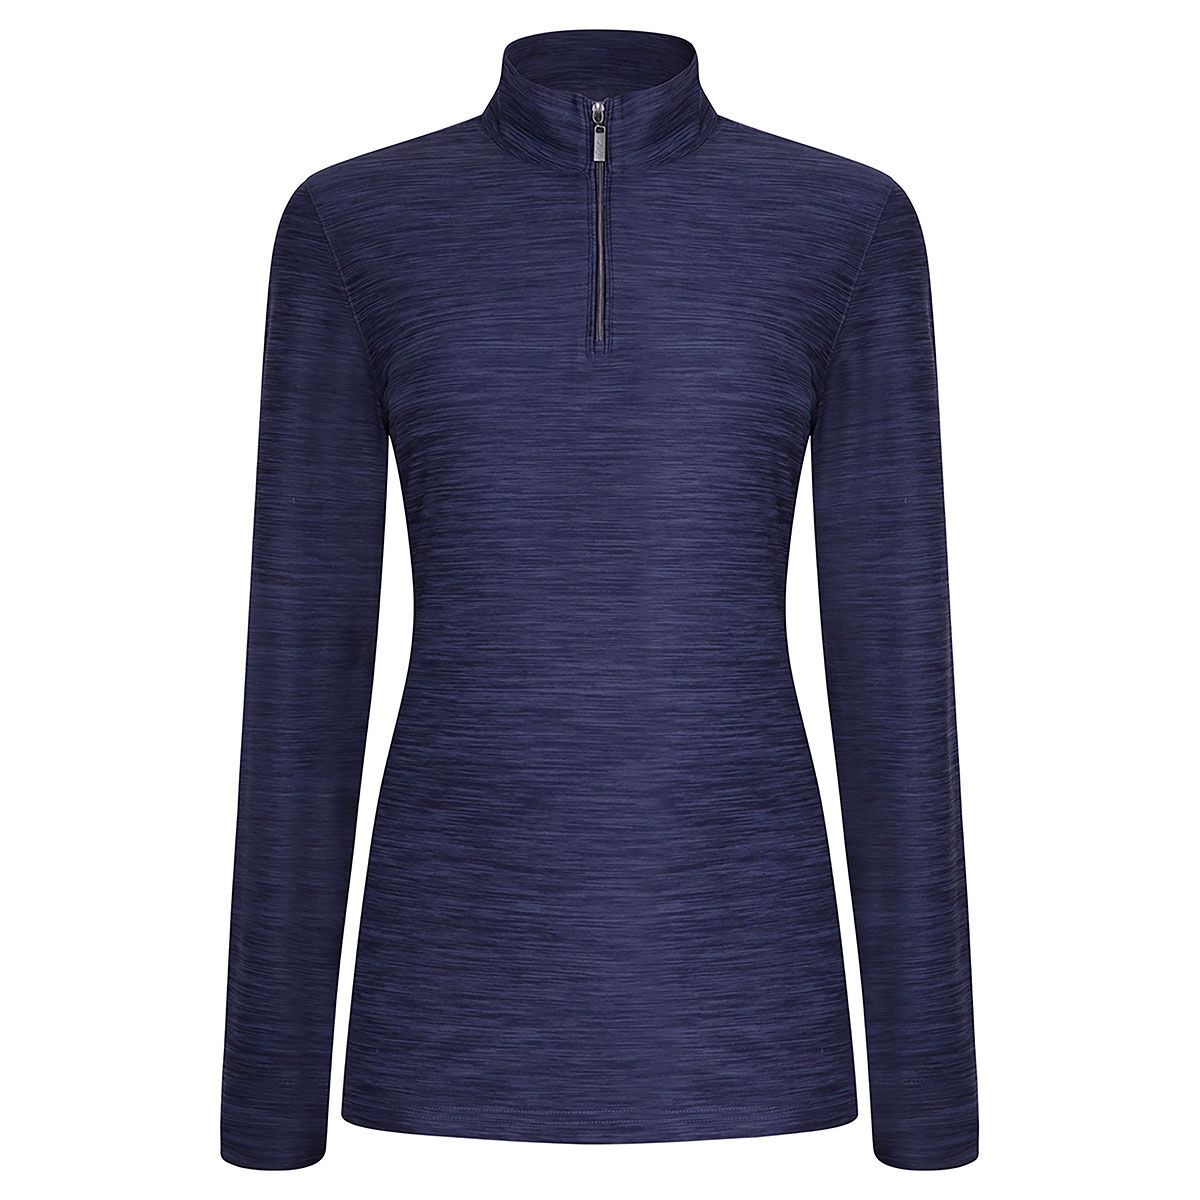 Vêtement intermédiaire Greg Norman pour femmes, femme, Small, Navy blue | Online Golf